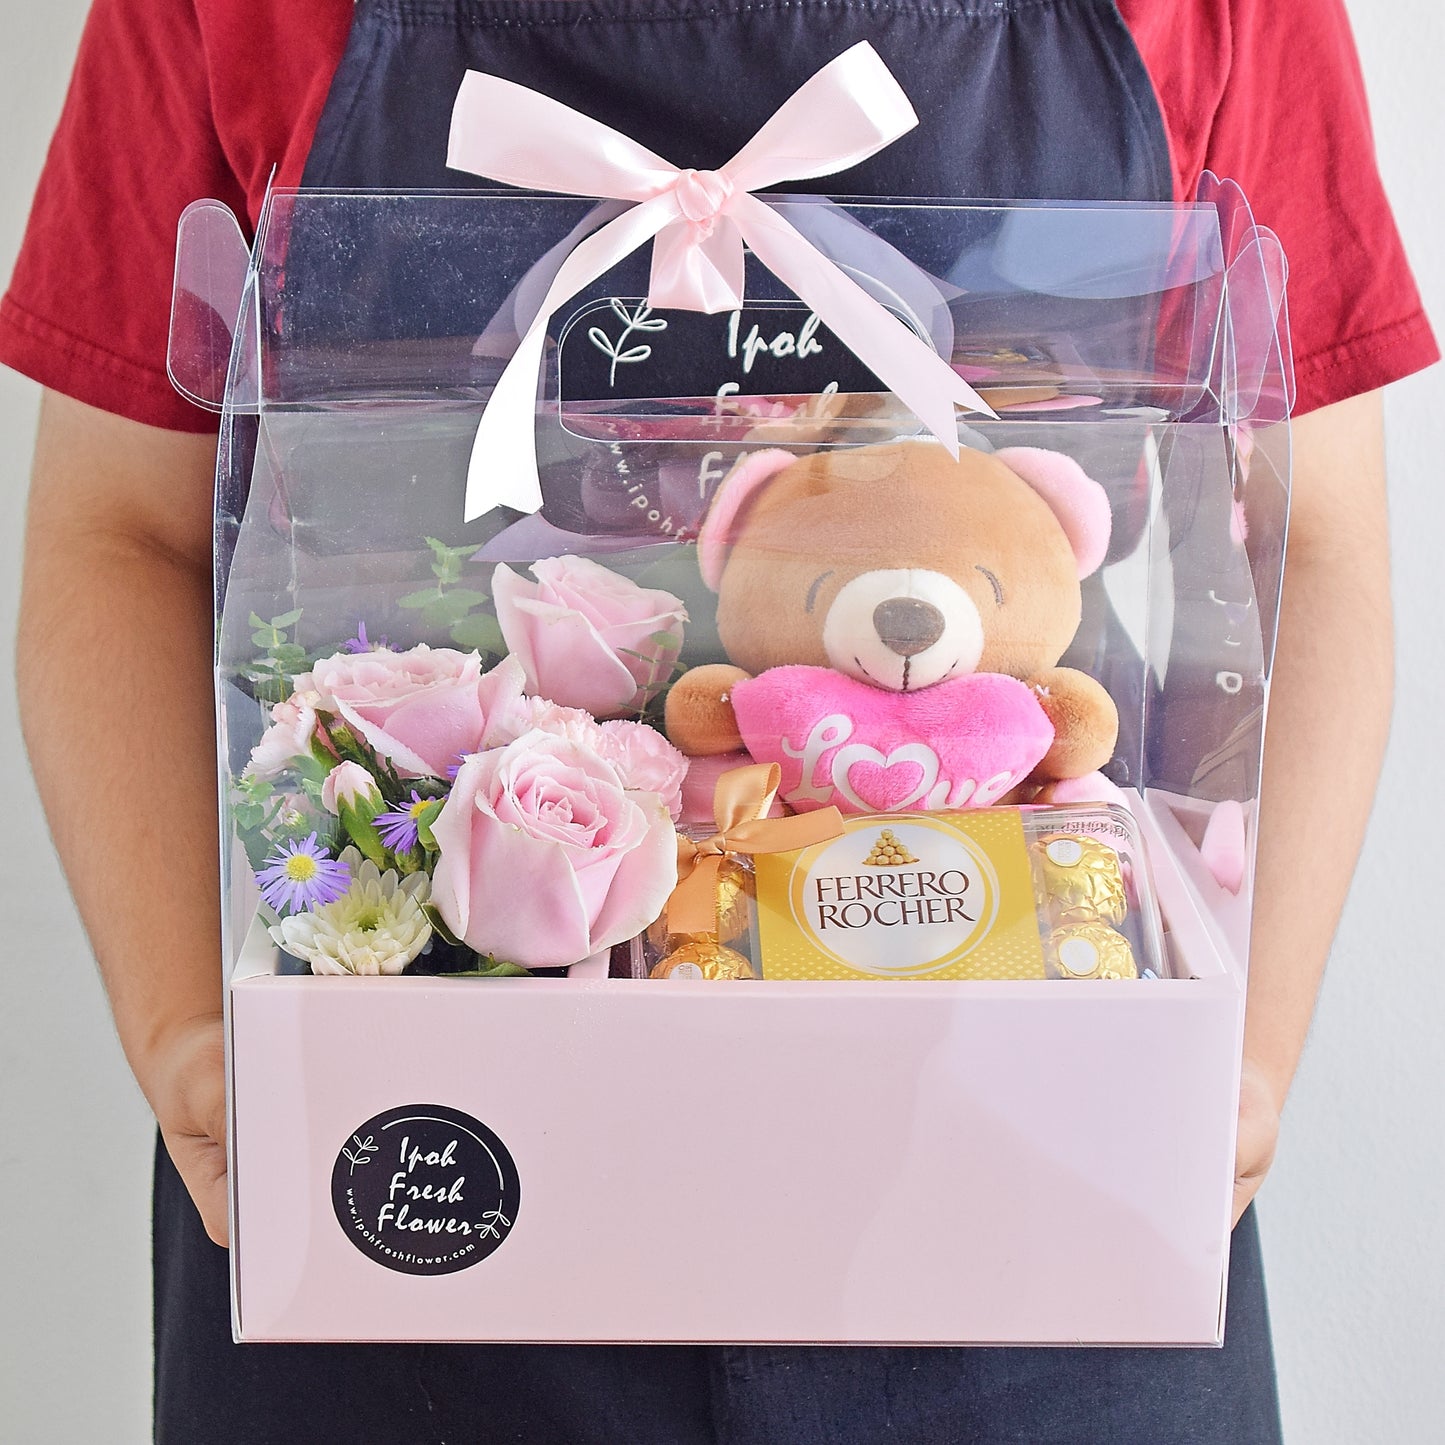 Be My Valentine| Qixi Valentine Gift Set| Same Day Delivery